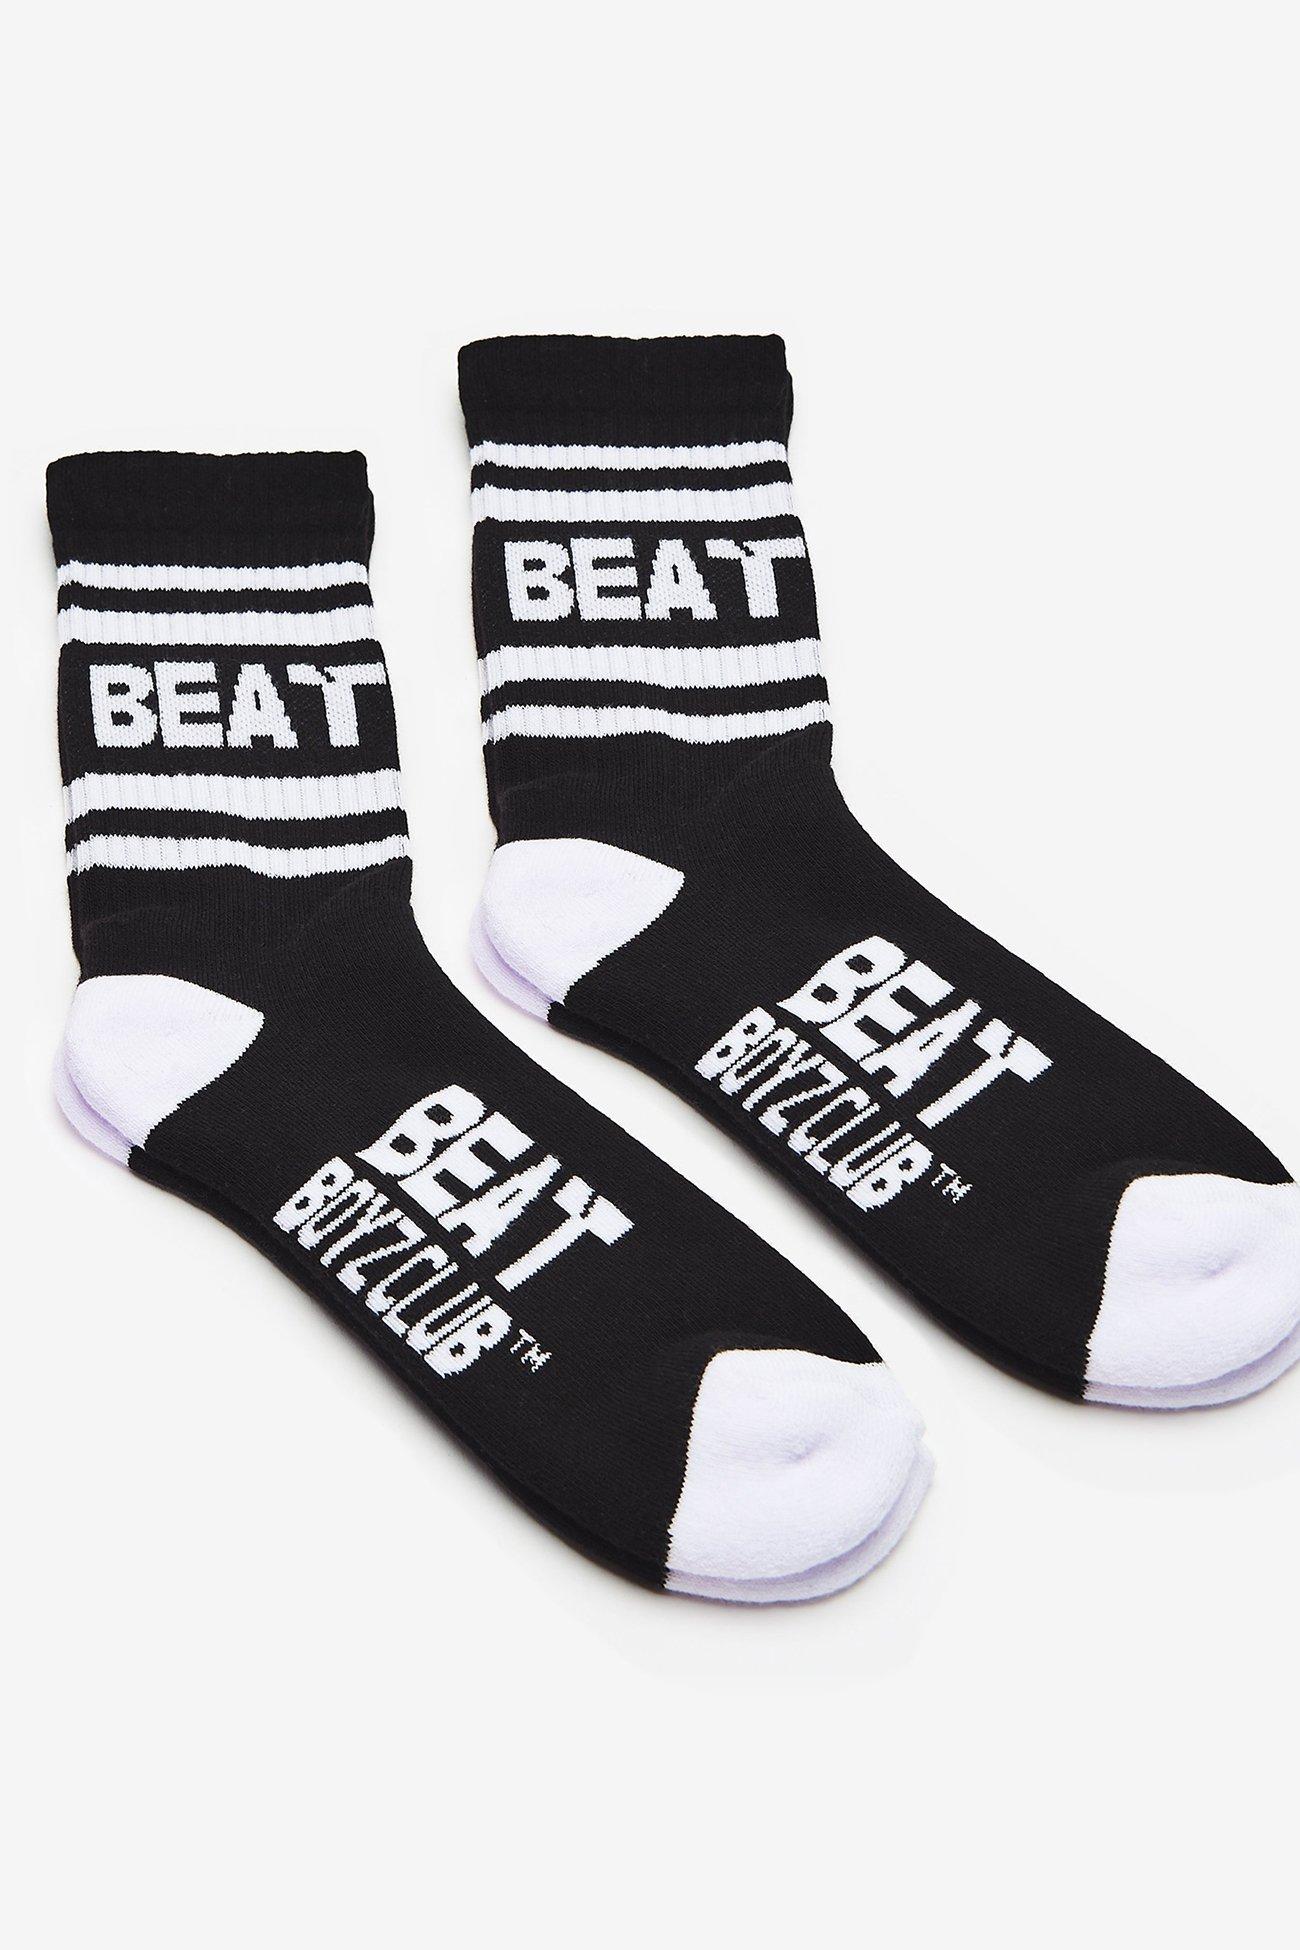 'Beat Boyz Twinpack Sports Socks